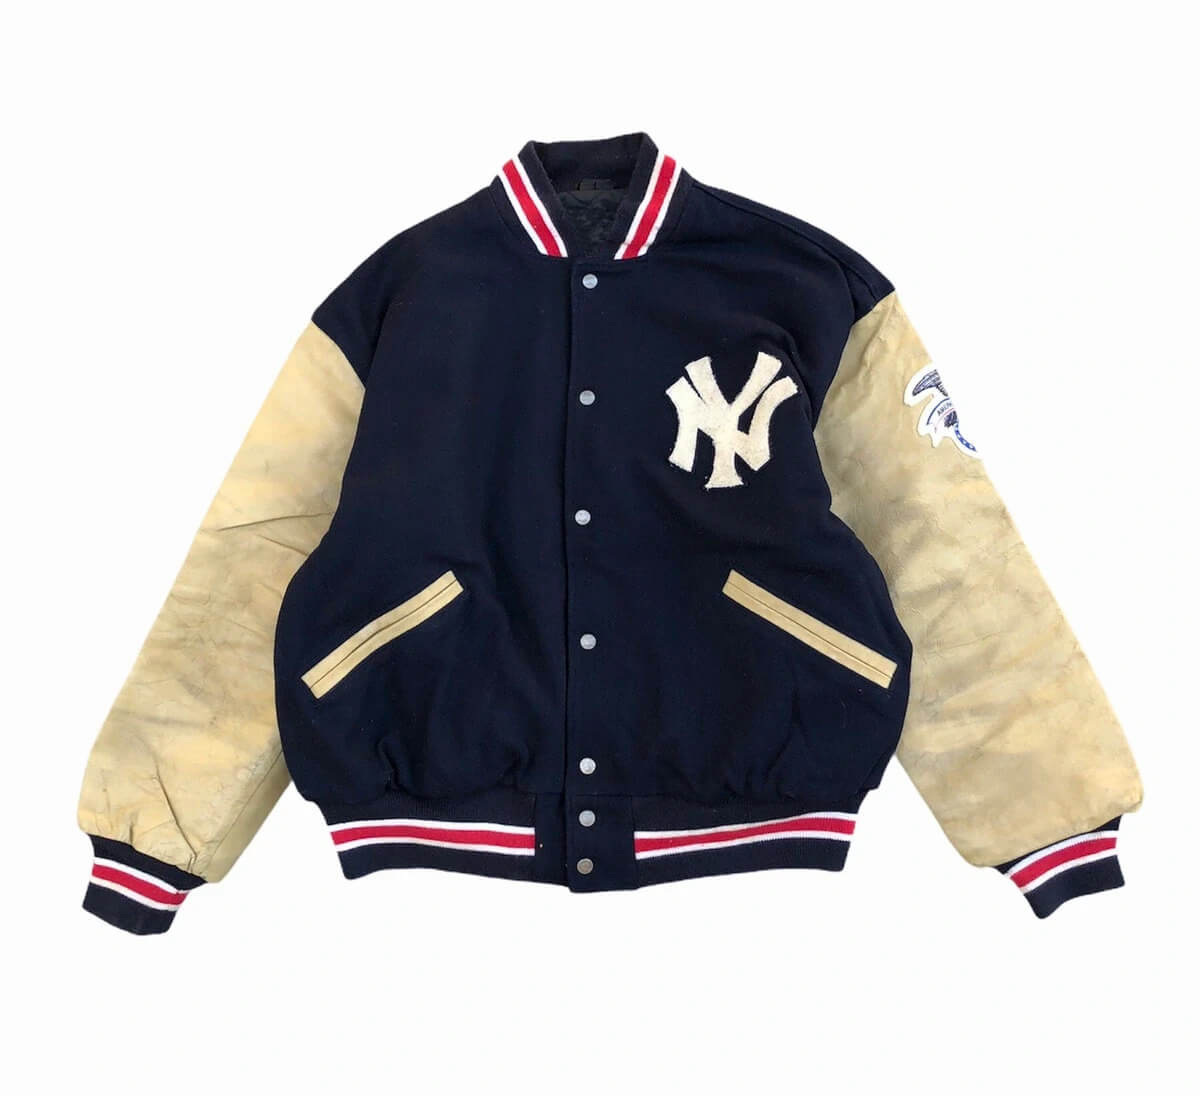 New York Yankees' Uniform Re-Design: Tommy Hilfiger Goes Where No